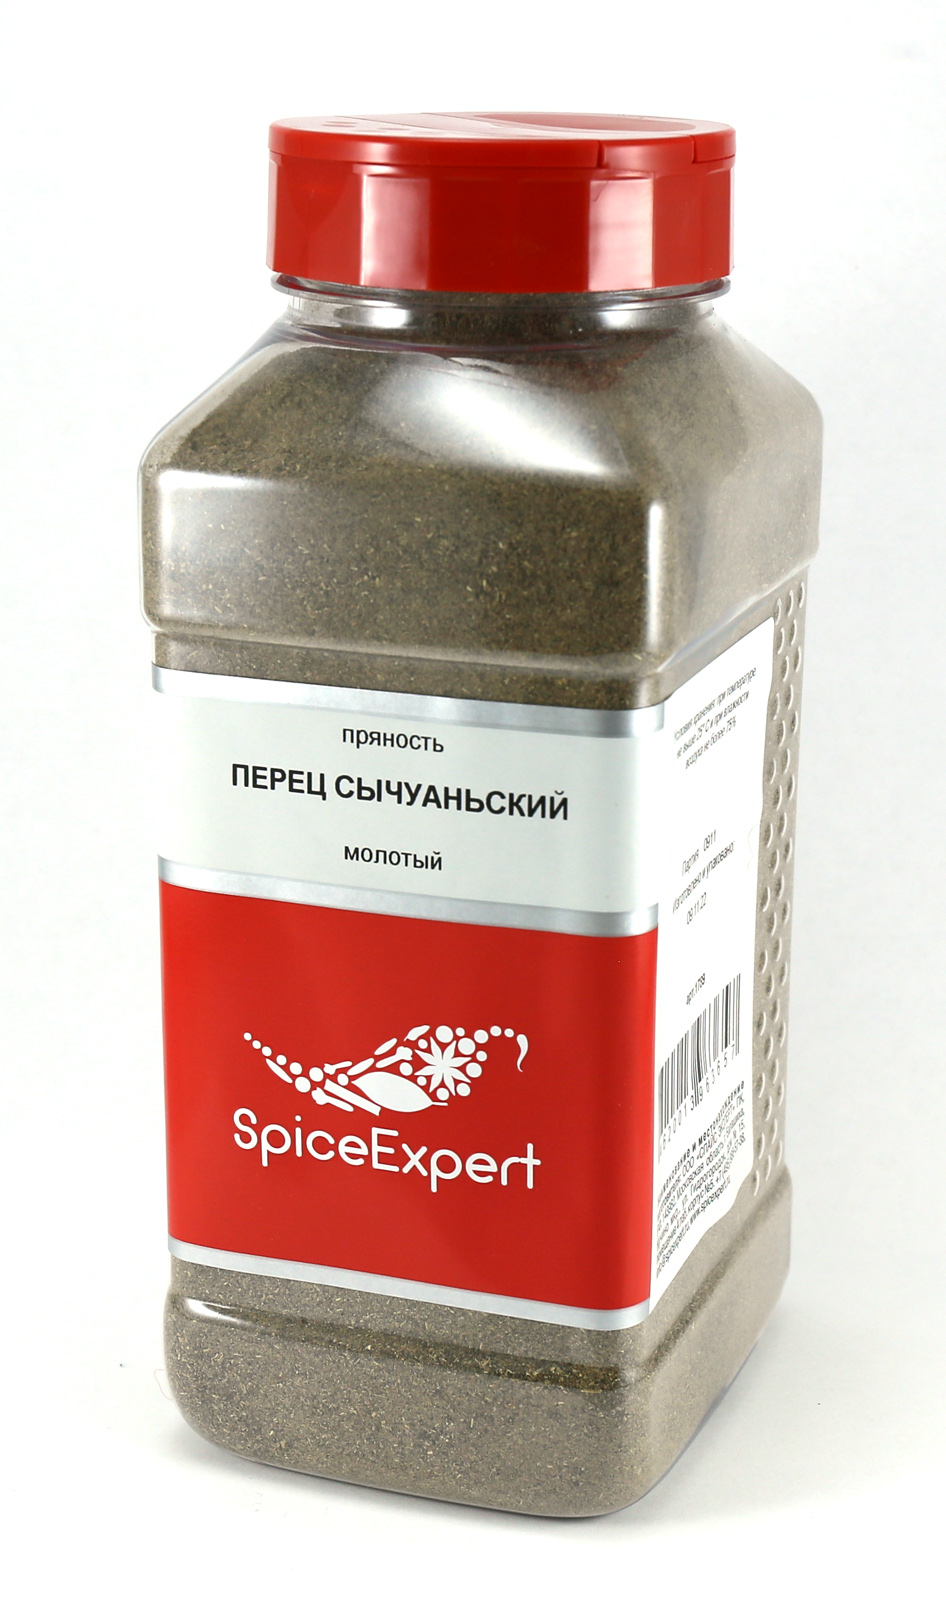 Перец Сычуаньский SpiceExpert молотый 500г